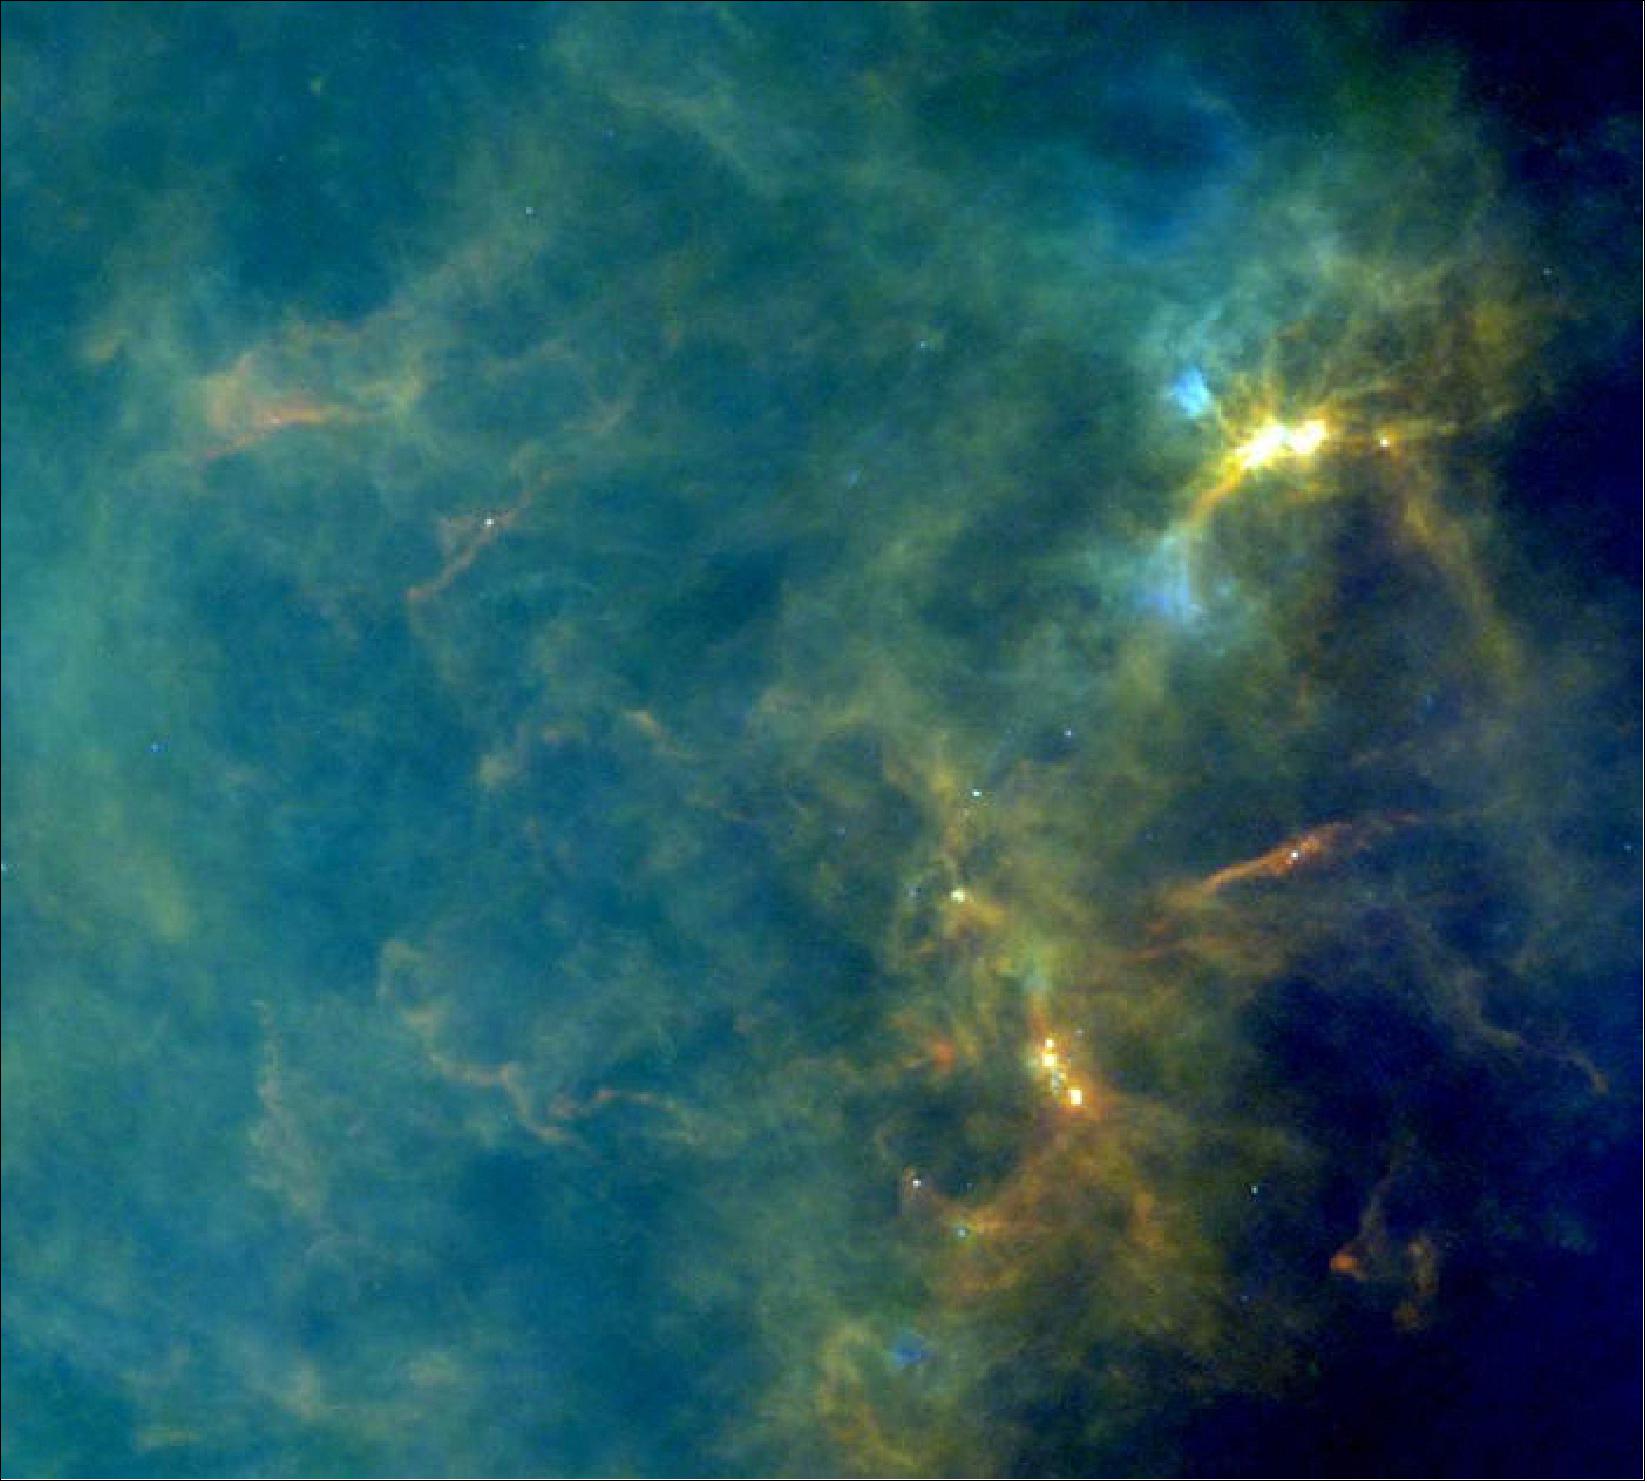 Figure 46: Herschel reveals filaments in the Serpens Core [image credit: ESA/Herschel/PACS/SPIRE/V. Roccatagliata (University of Munich, Germany)]